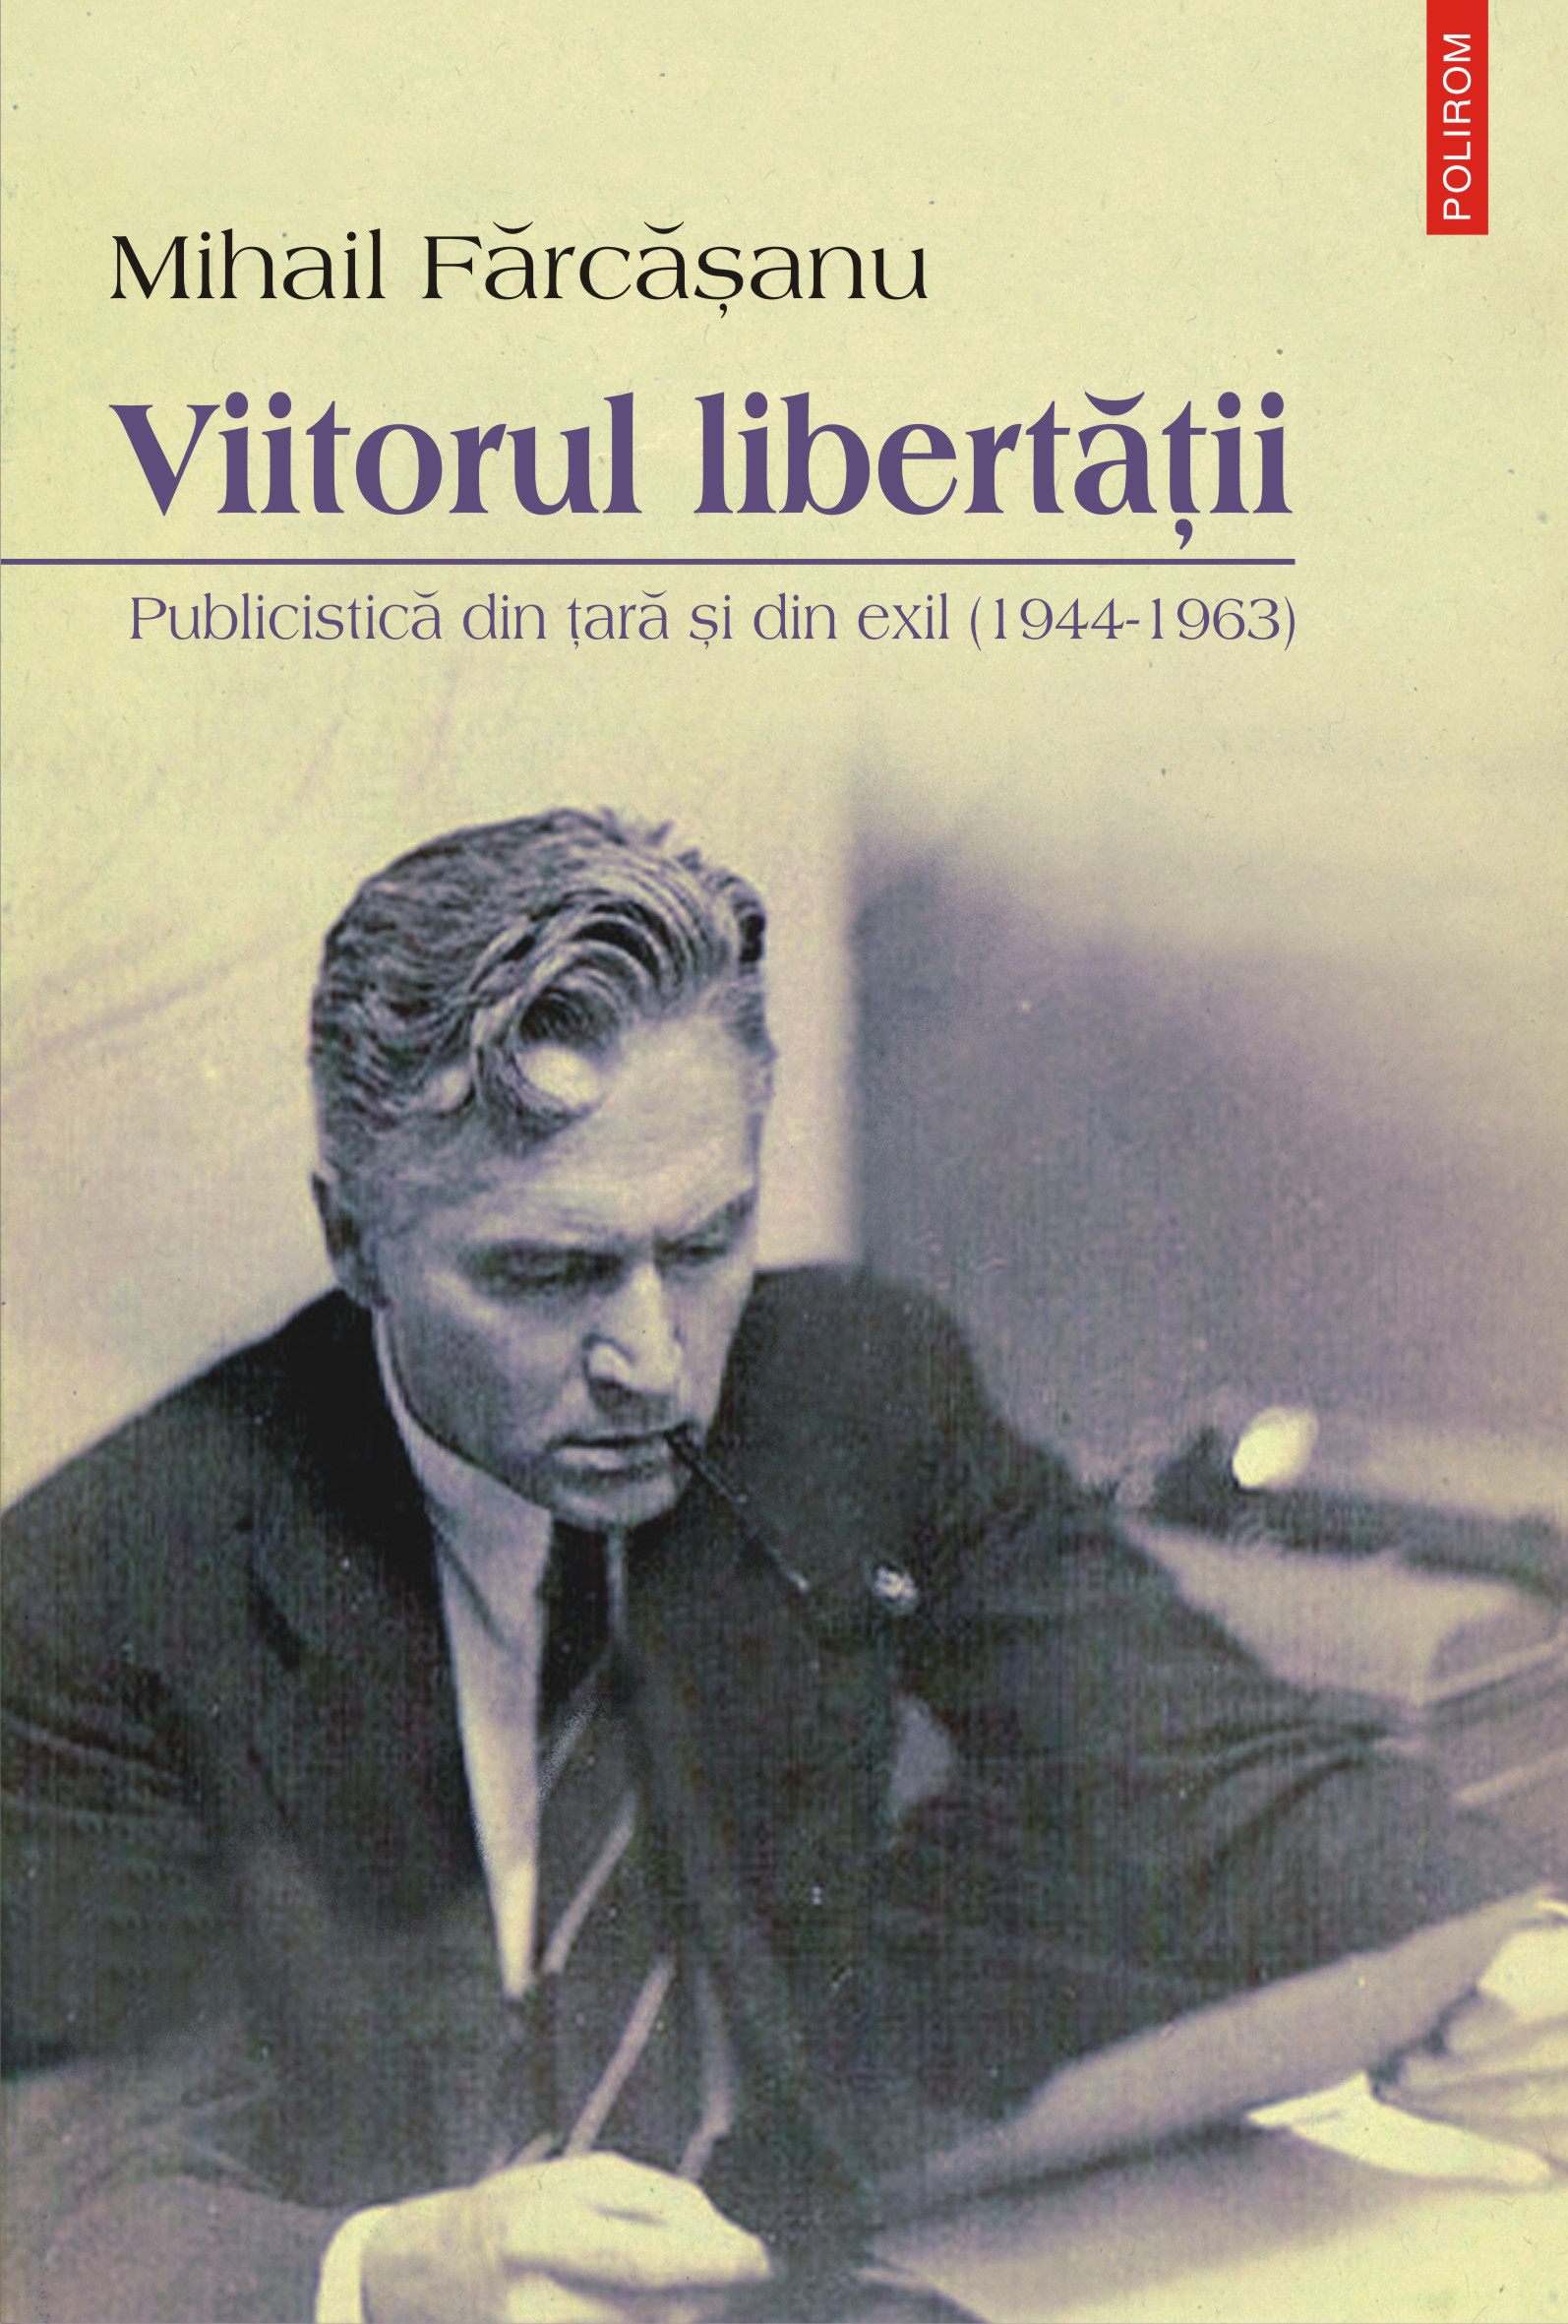 eBook Viitorul libertatii. Publicistica din tara si din exil (1944-1963) - Mihail Farcasanu